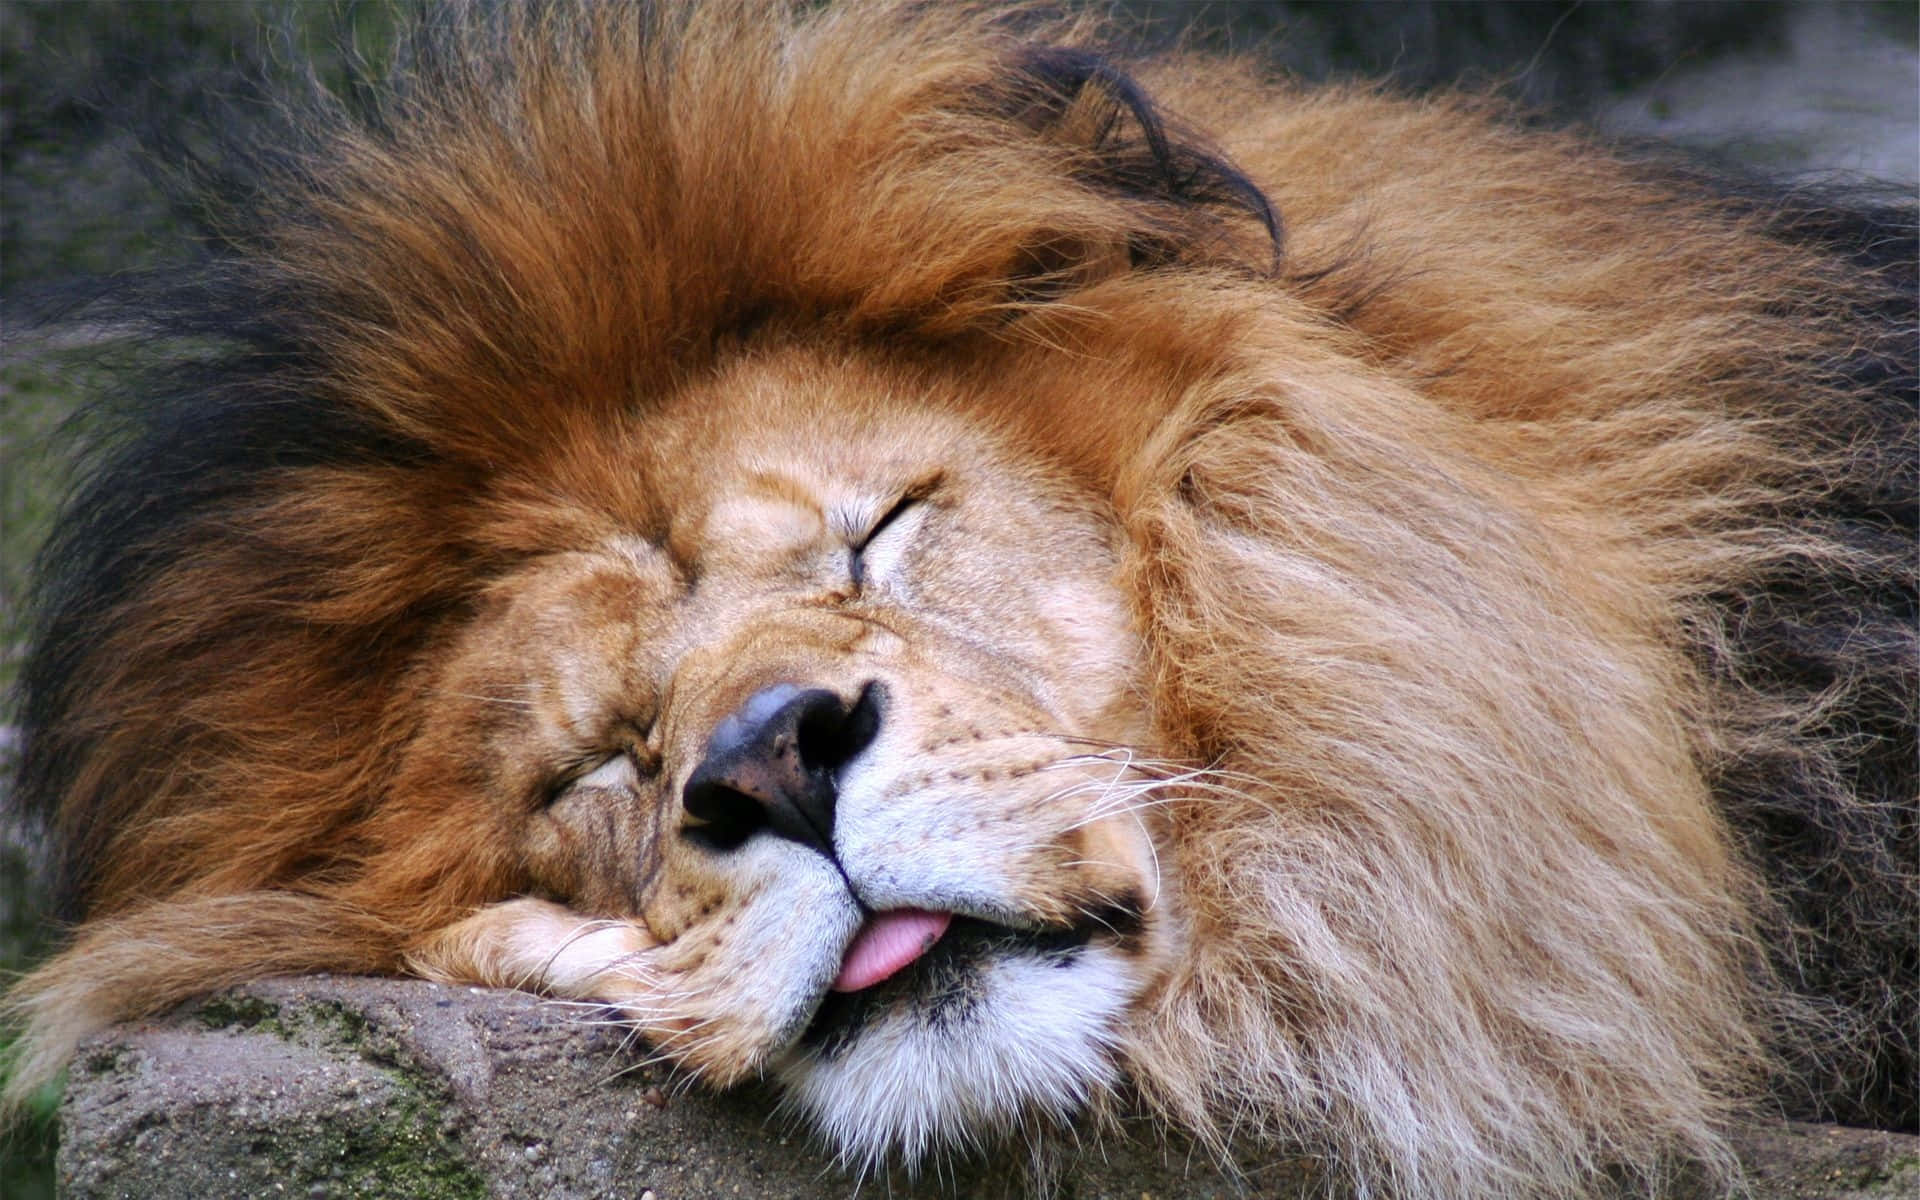 Serene Slumber - Majestic Lion in Repose Wallpaper